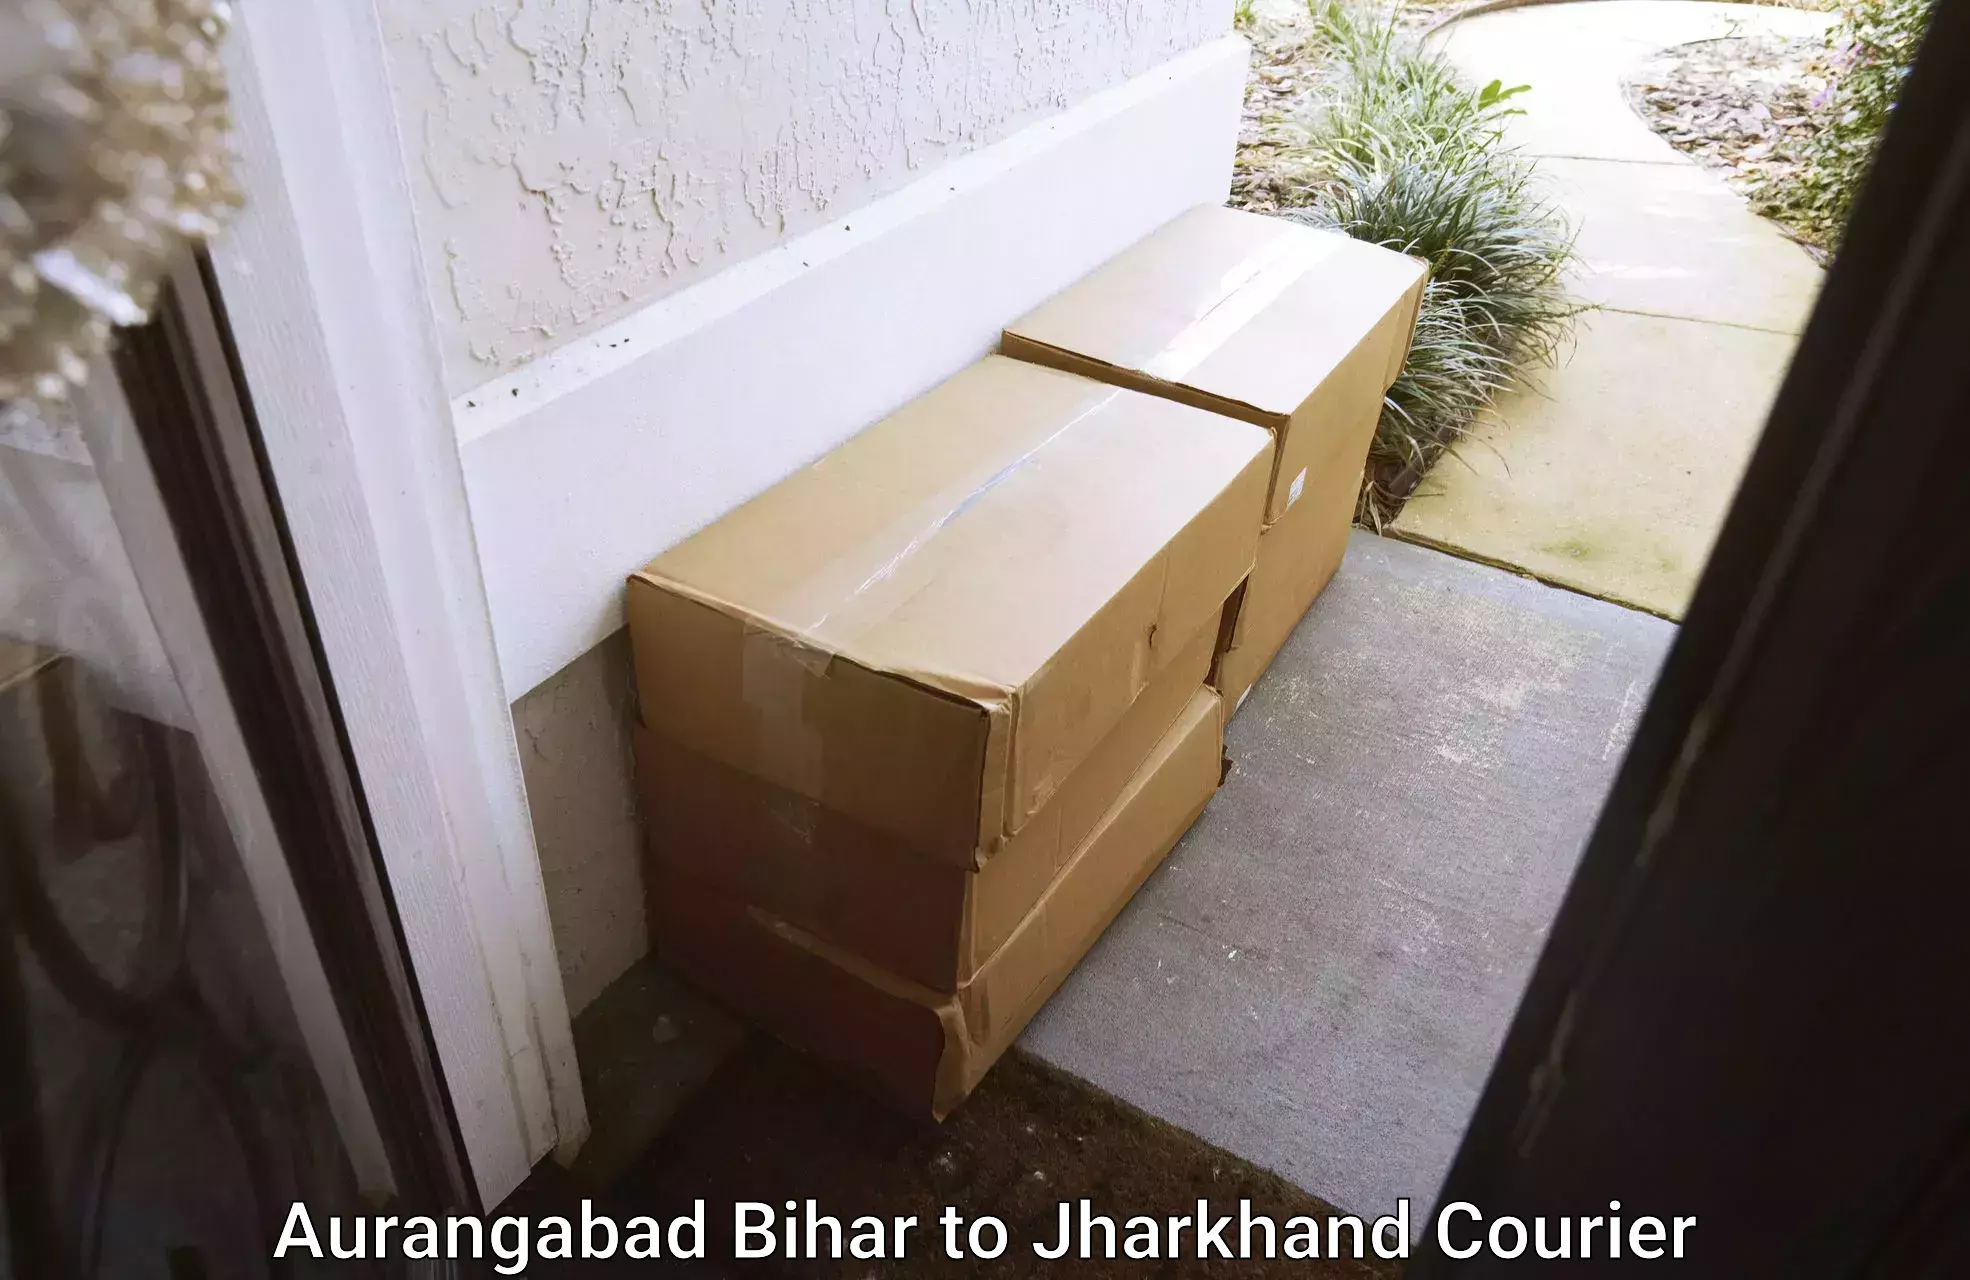 Reliable movers in Aurangabad Bihar to Medininagar